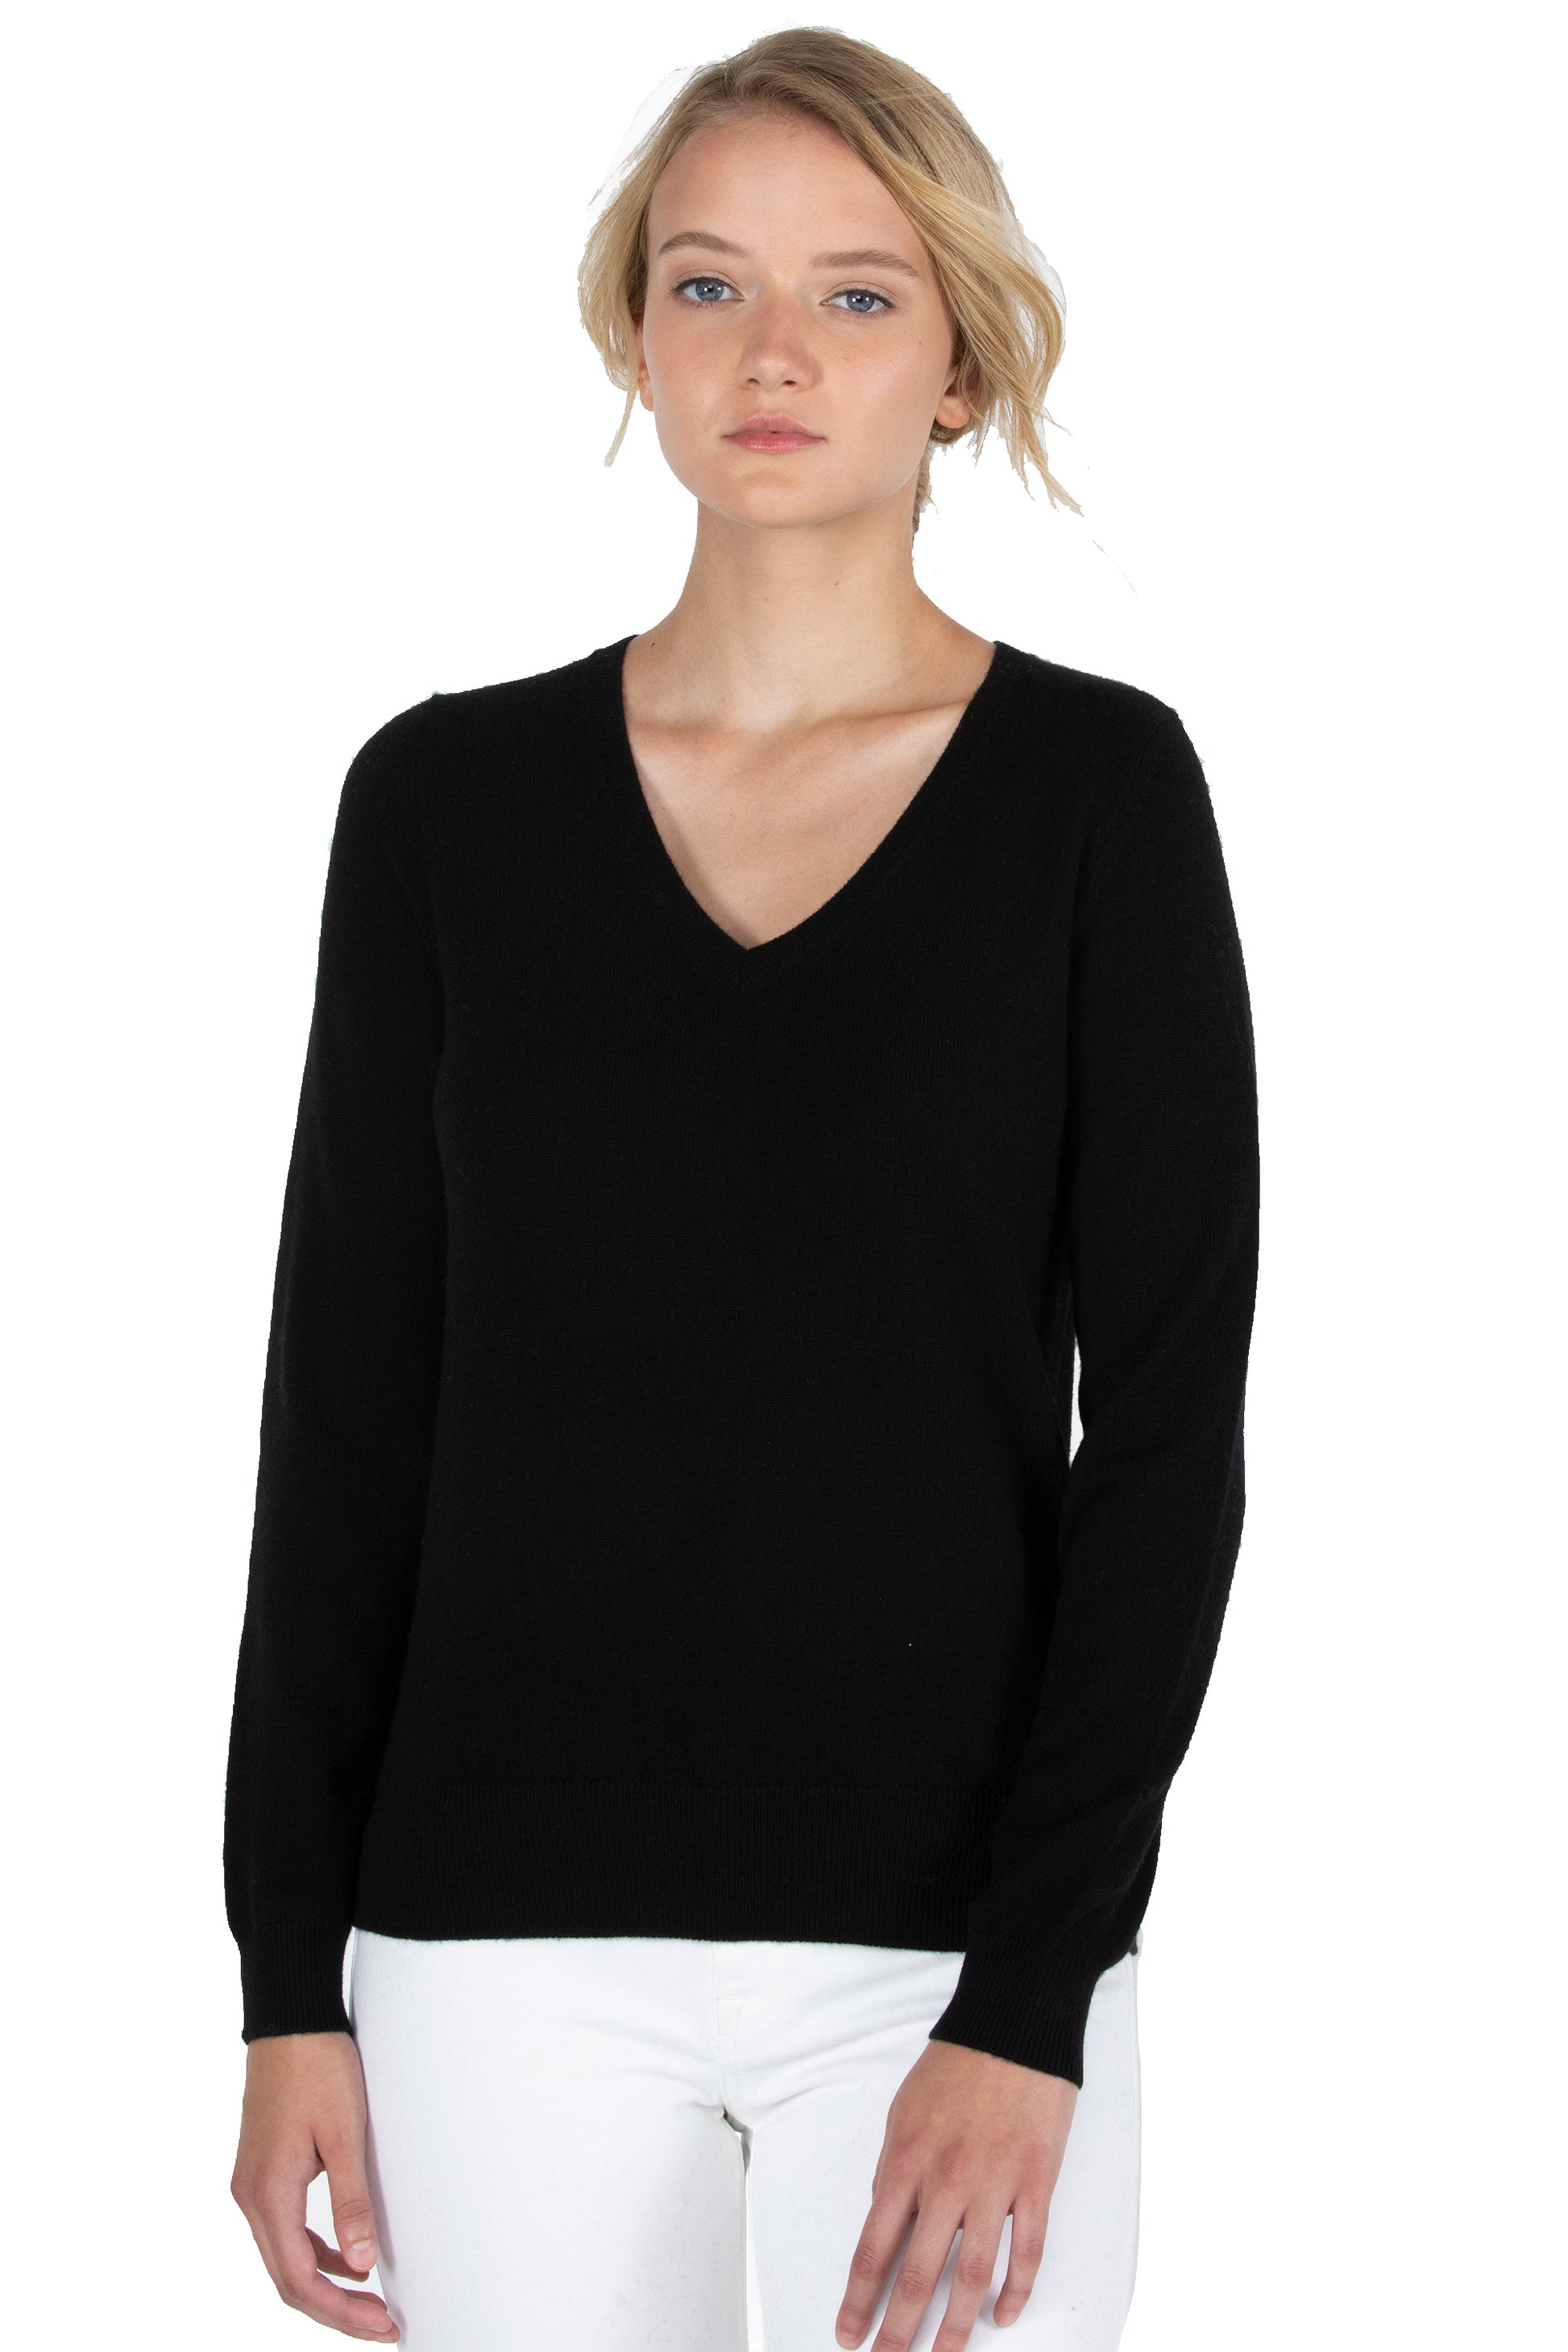 JENNIE LIU Women's 100% Pure Cashmere Long Sleeve Pullover V Neck Swea –  JENNIE CASHMERE